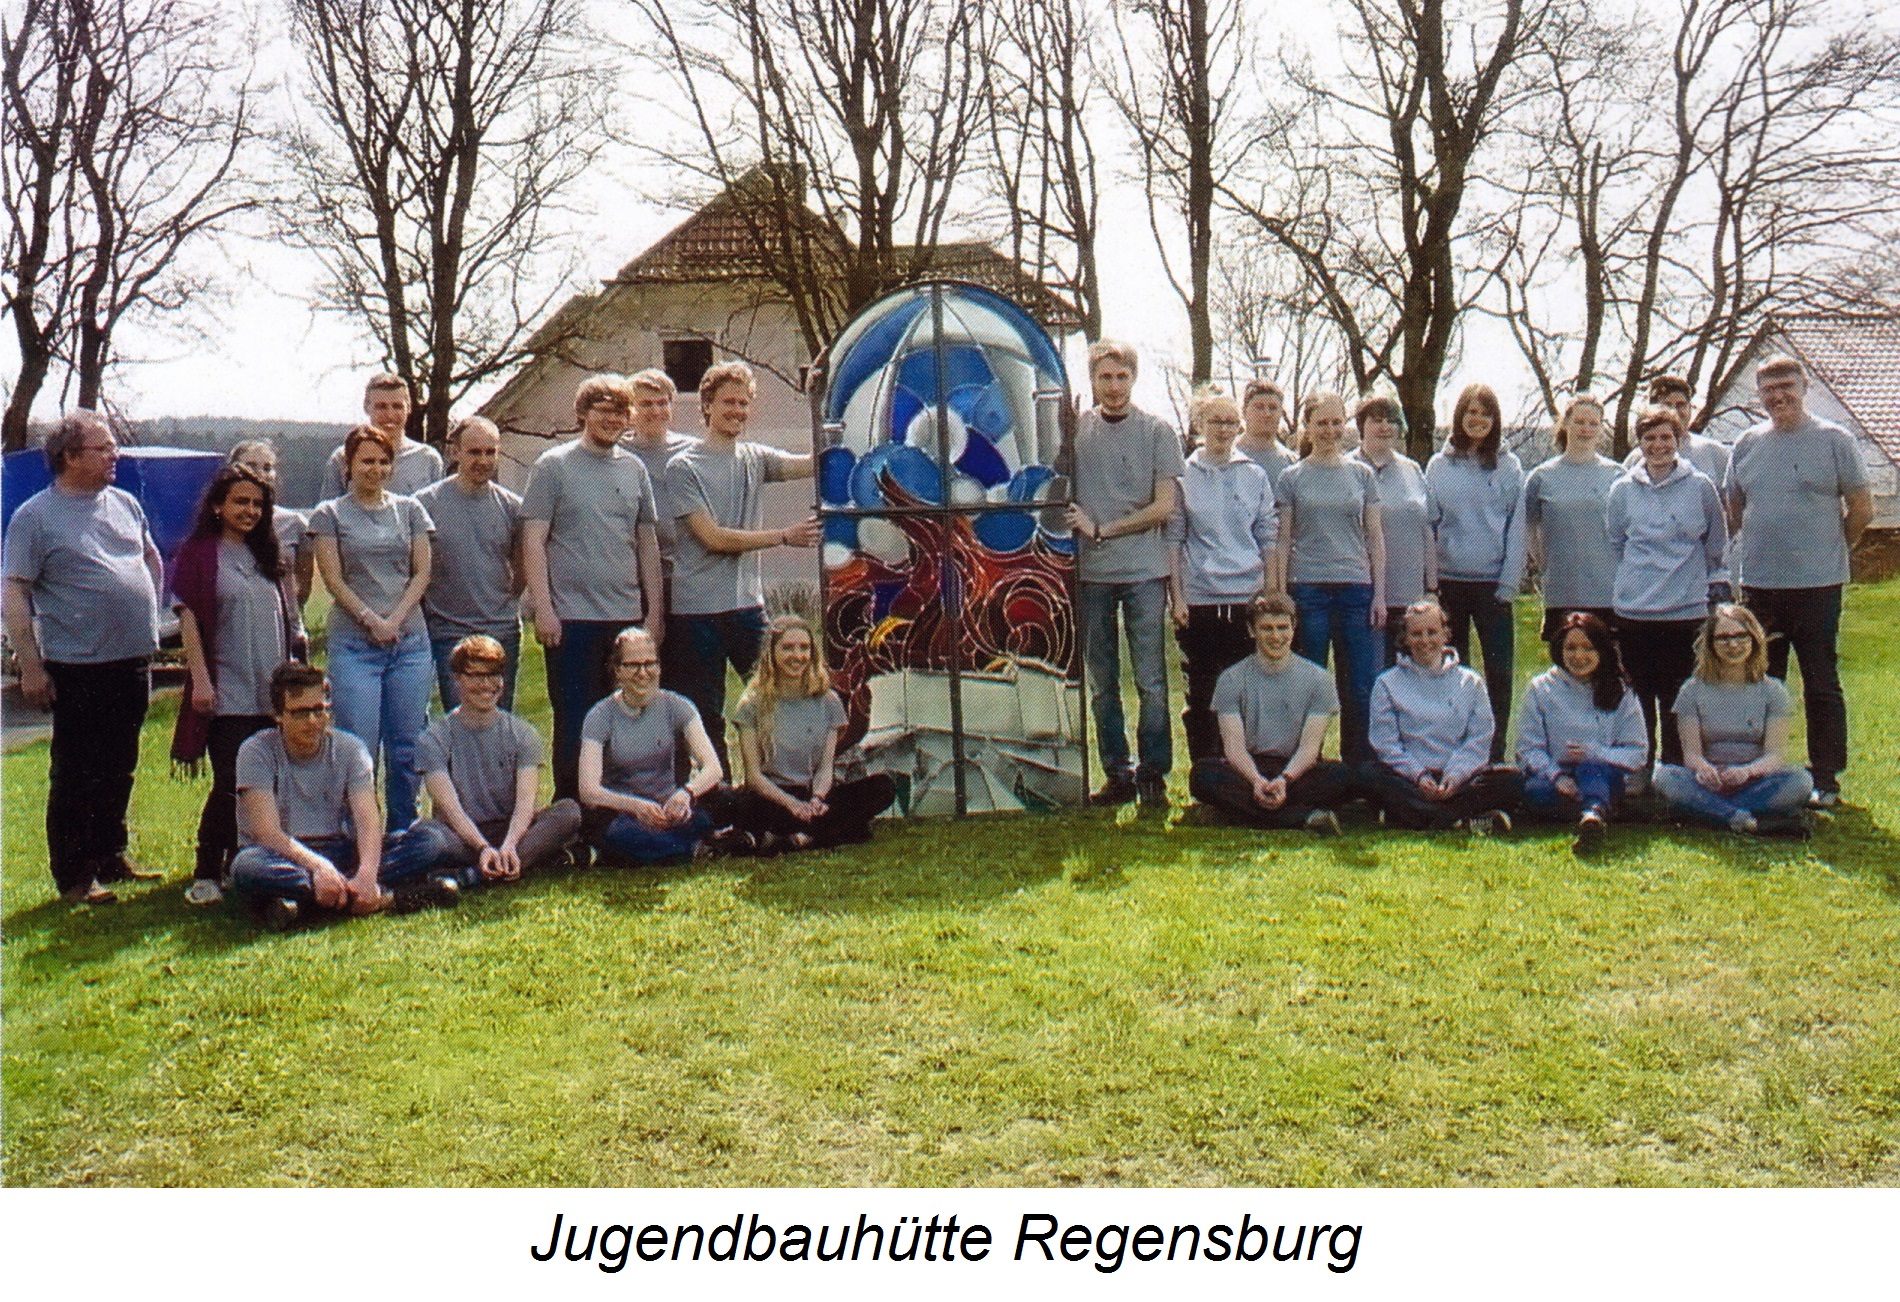 JBH Regensburg fotominis